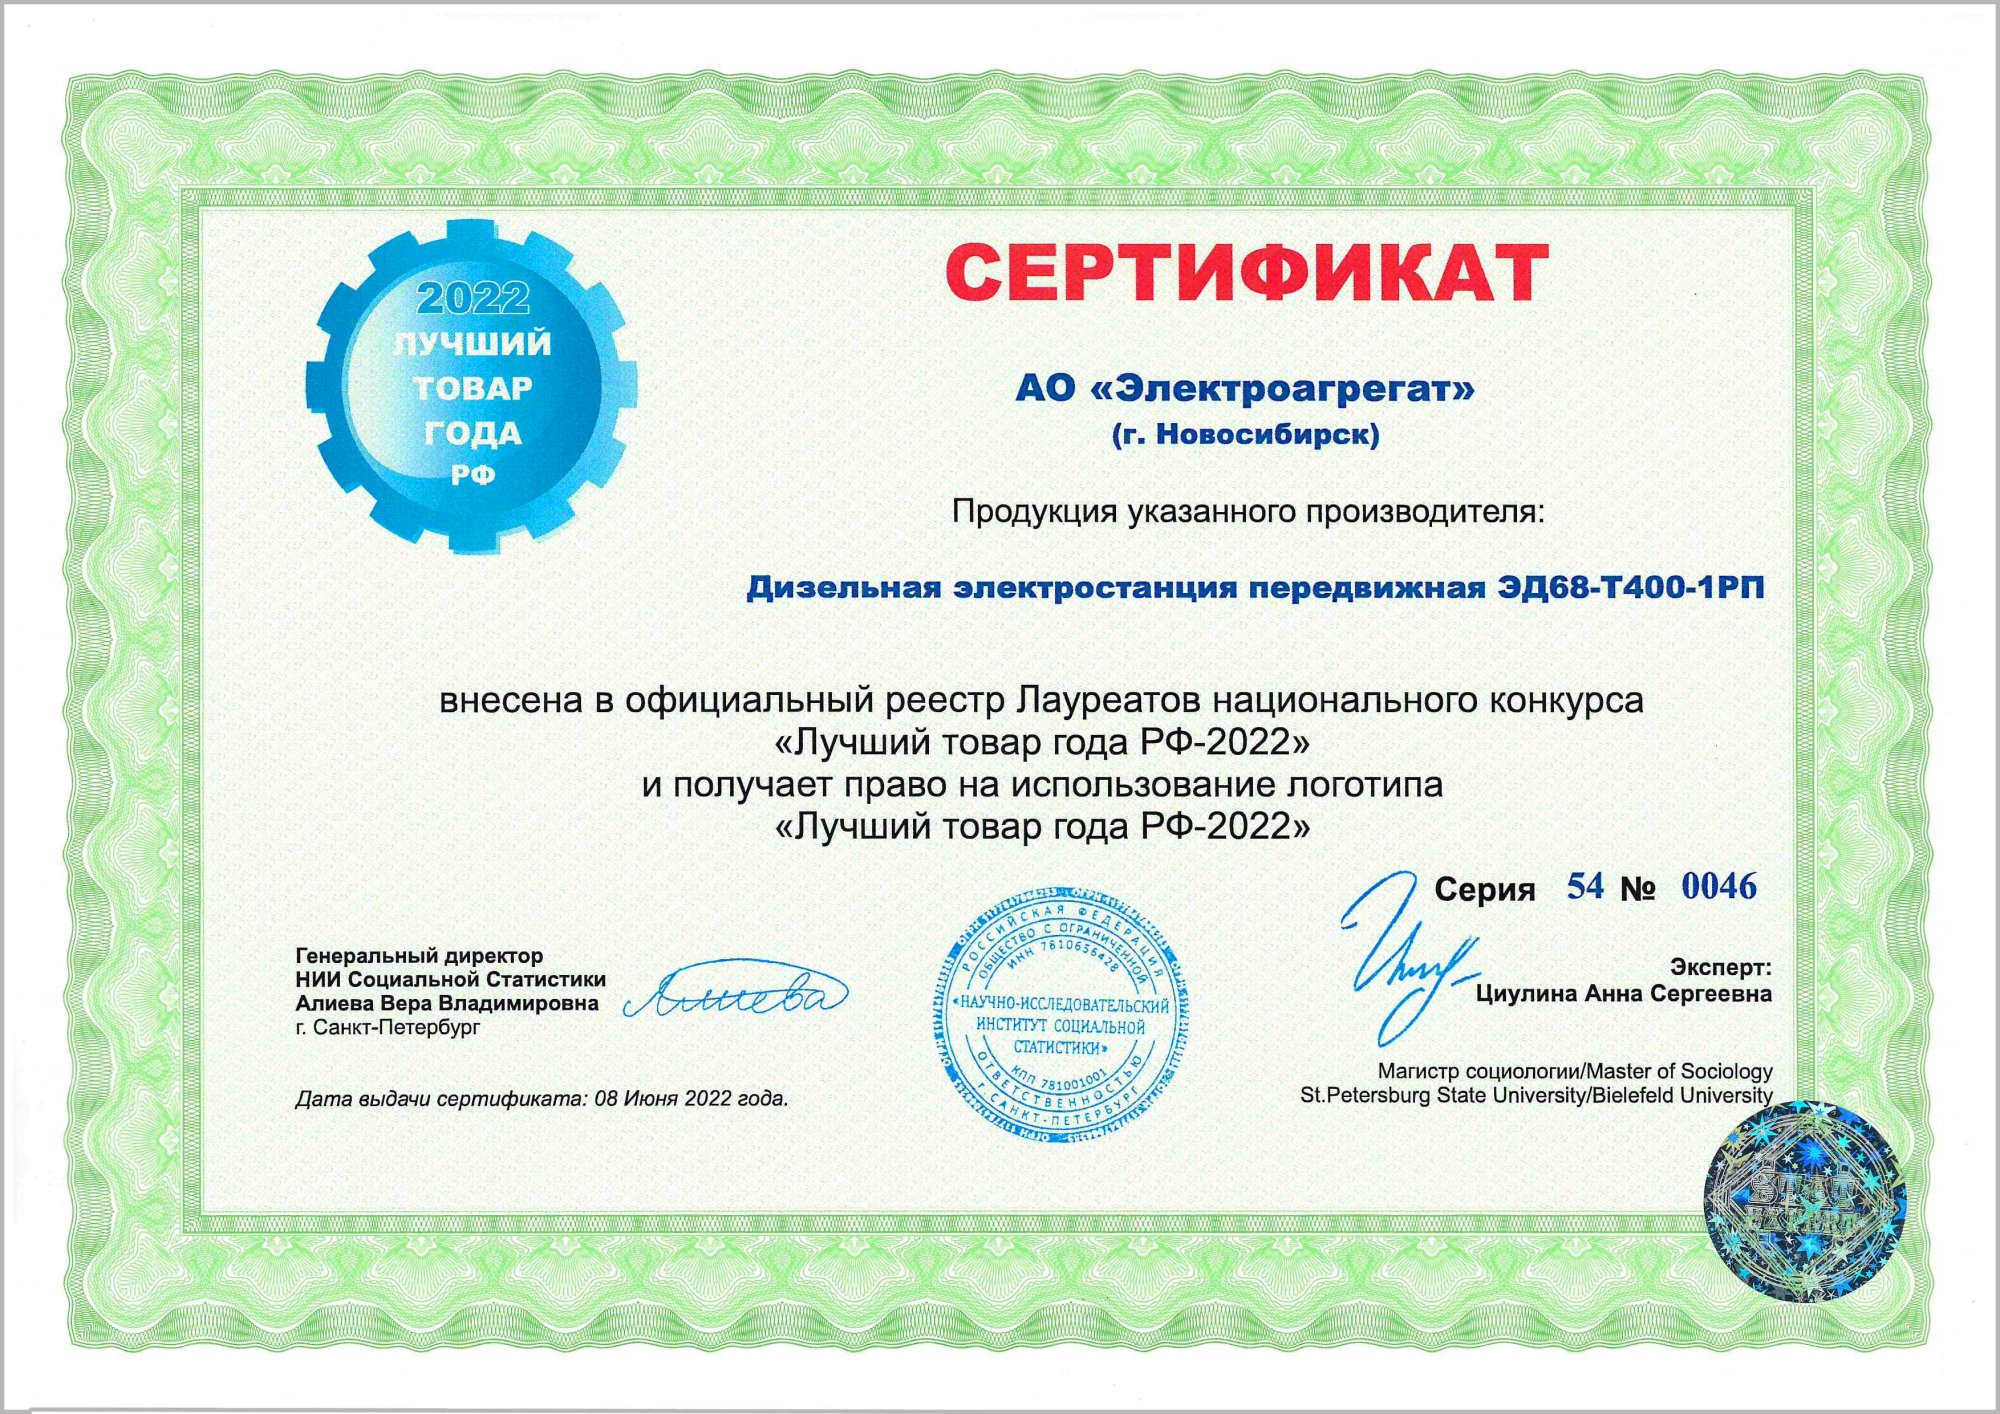 Сертификат АО Электроагрегат на ДГУ ЭД68-Т400-1РП. Лучший товар года РФ-2022